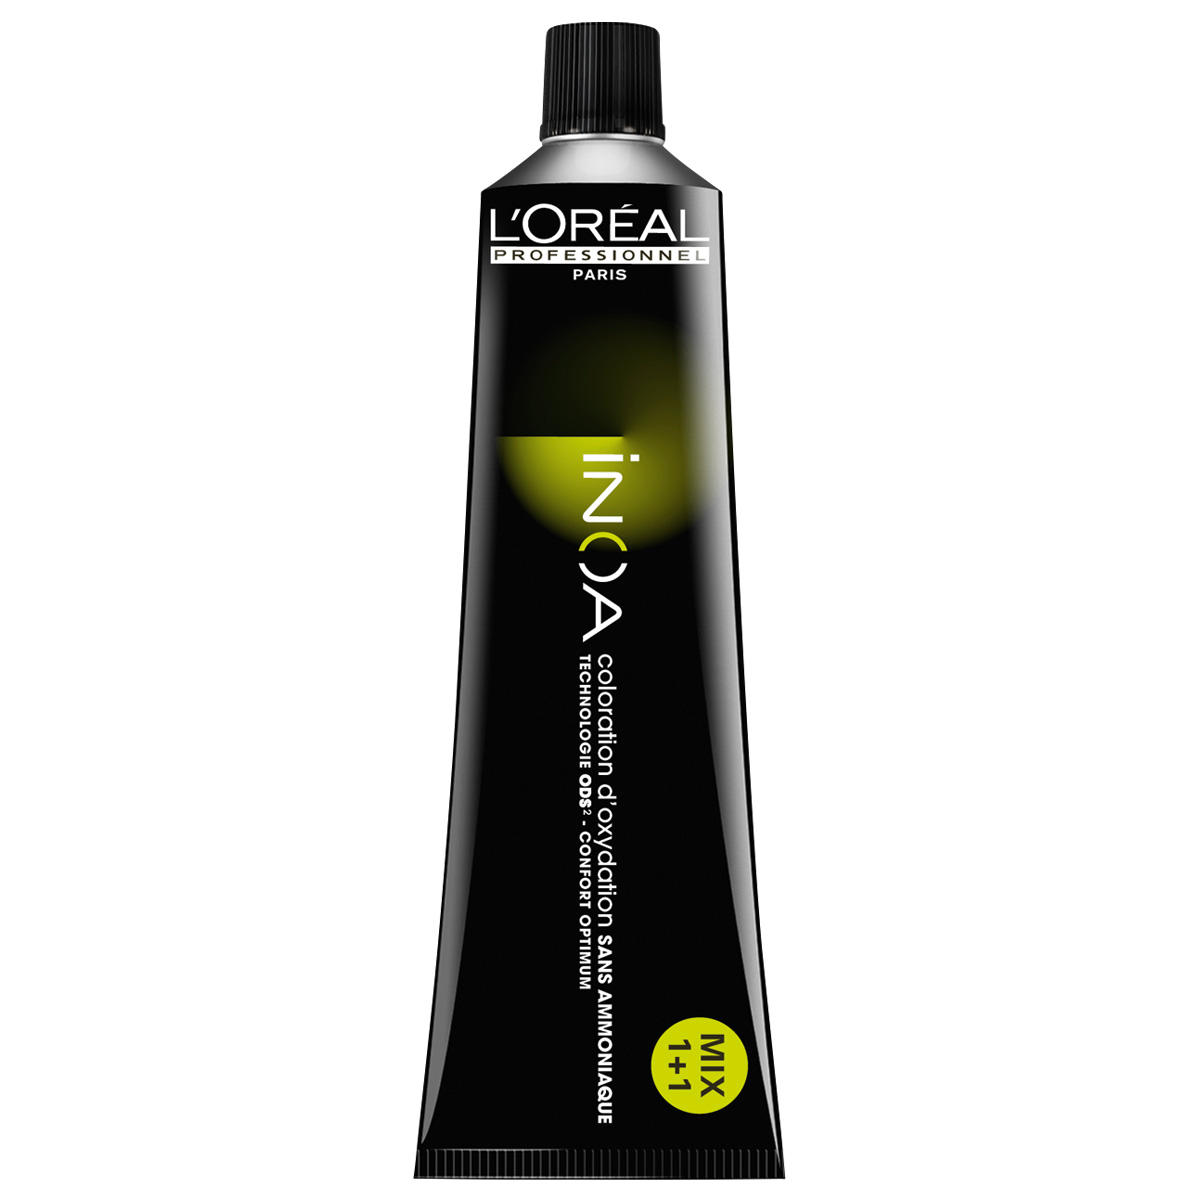 L'Oréal Professionnel Paris Coloration 7,4 Cobre rubio medio, tubo 60 ml